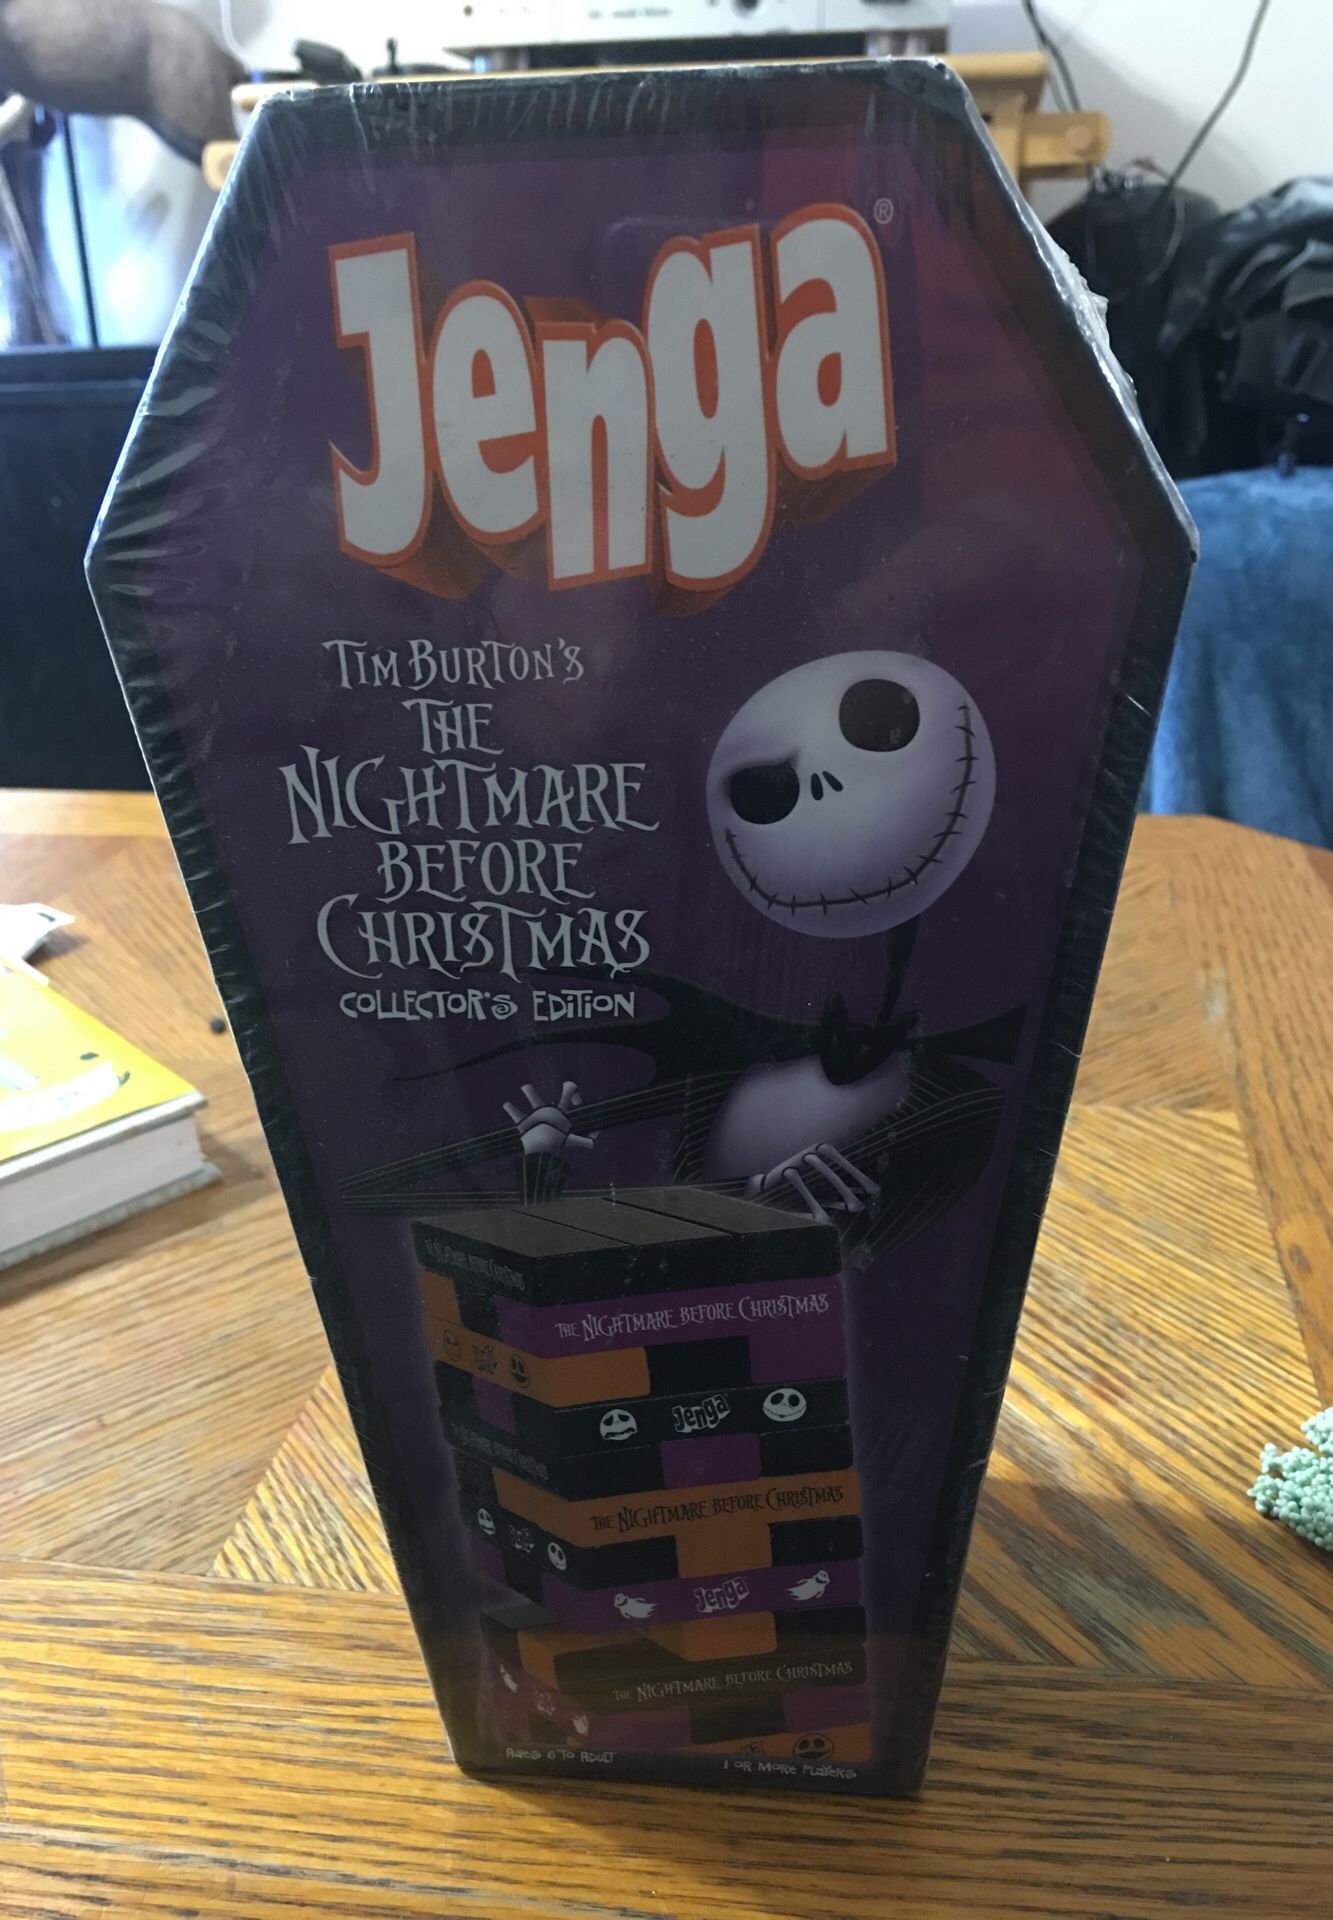 Unopened Jenga Tim Burton’s Nightmare Before Christmas collectors edition